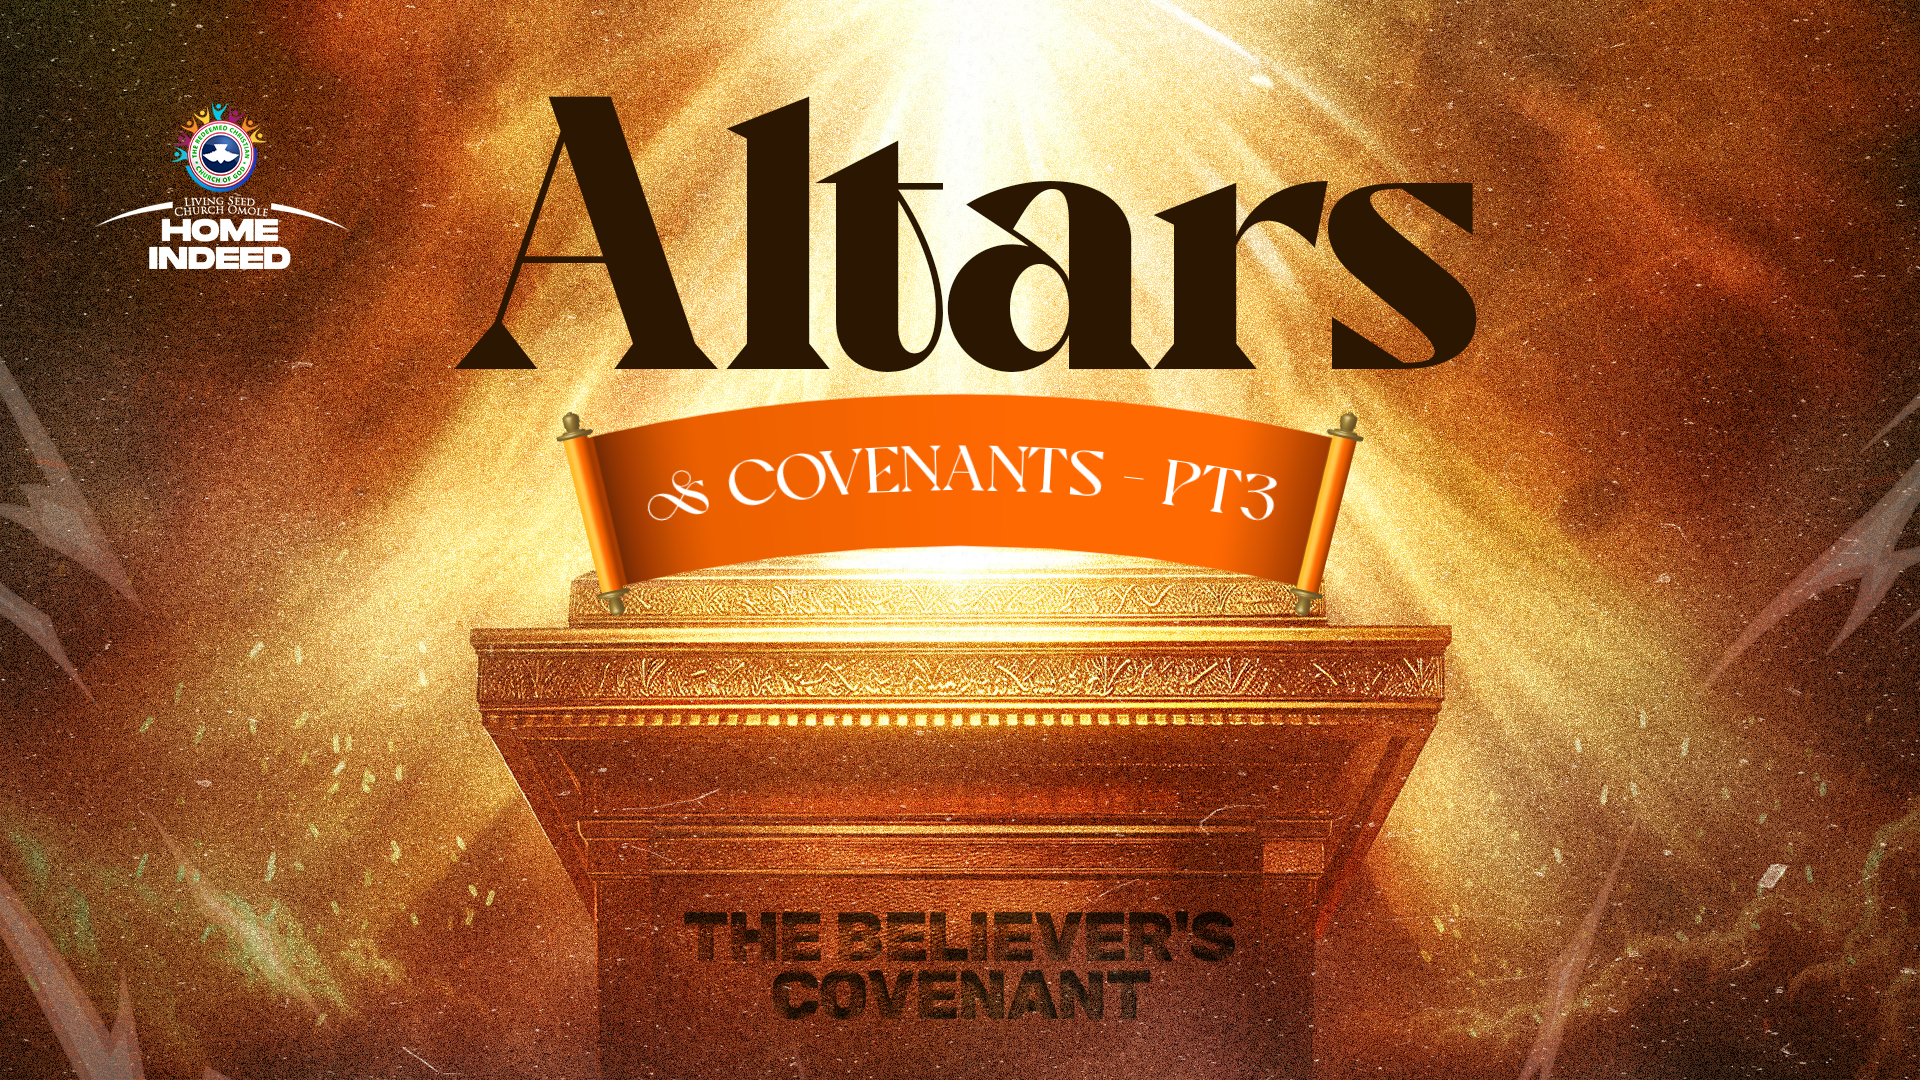 ALTARS & CONVENANTS: THE BELIVERS CONVENANT